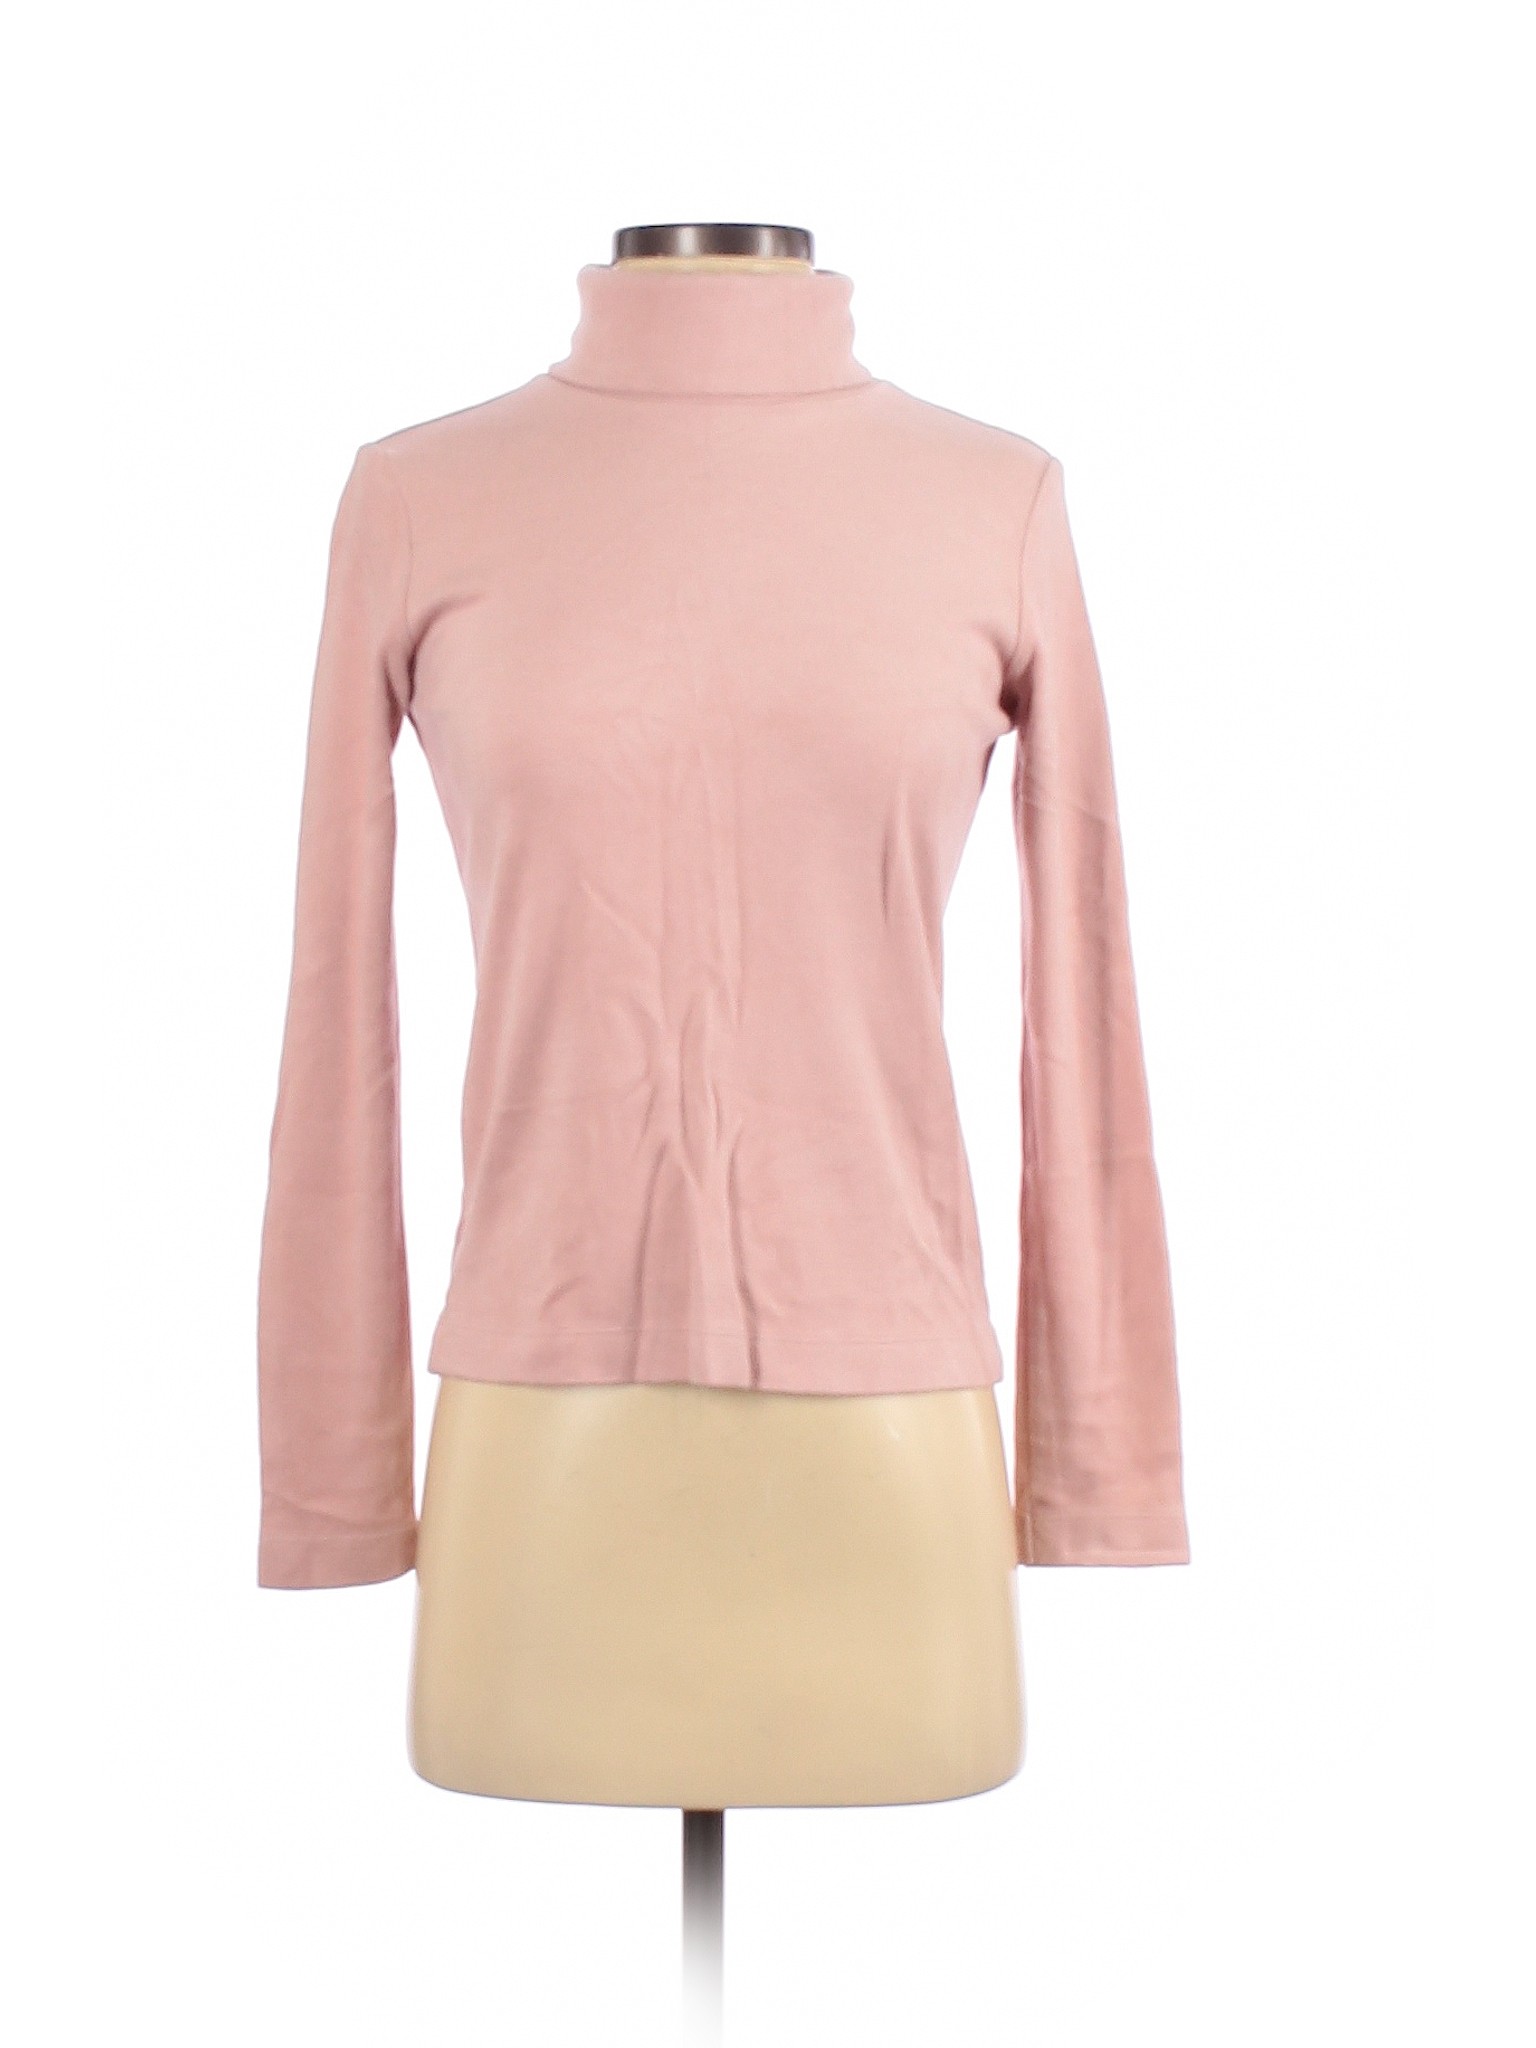 Uniqlo Women Pink Turtleneck Sweater XS | eBay